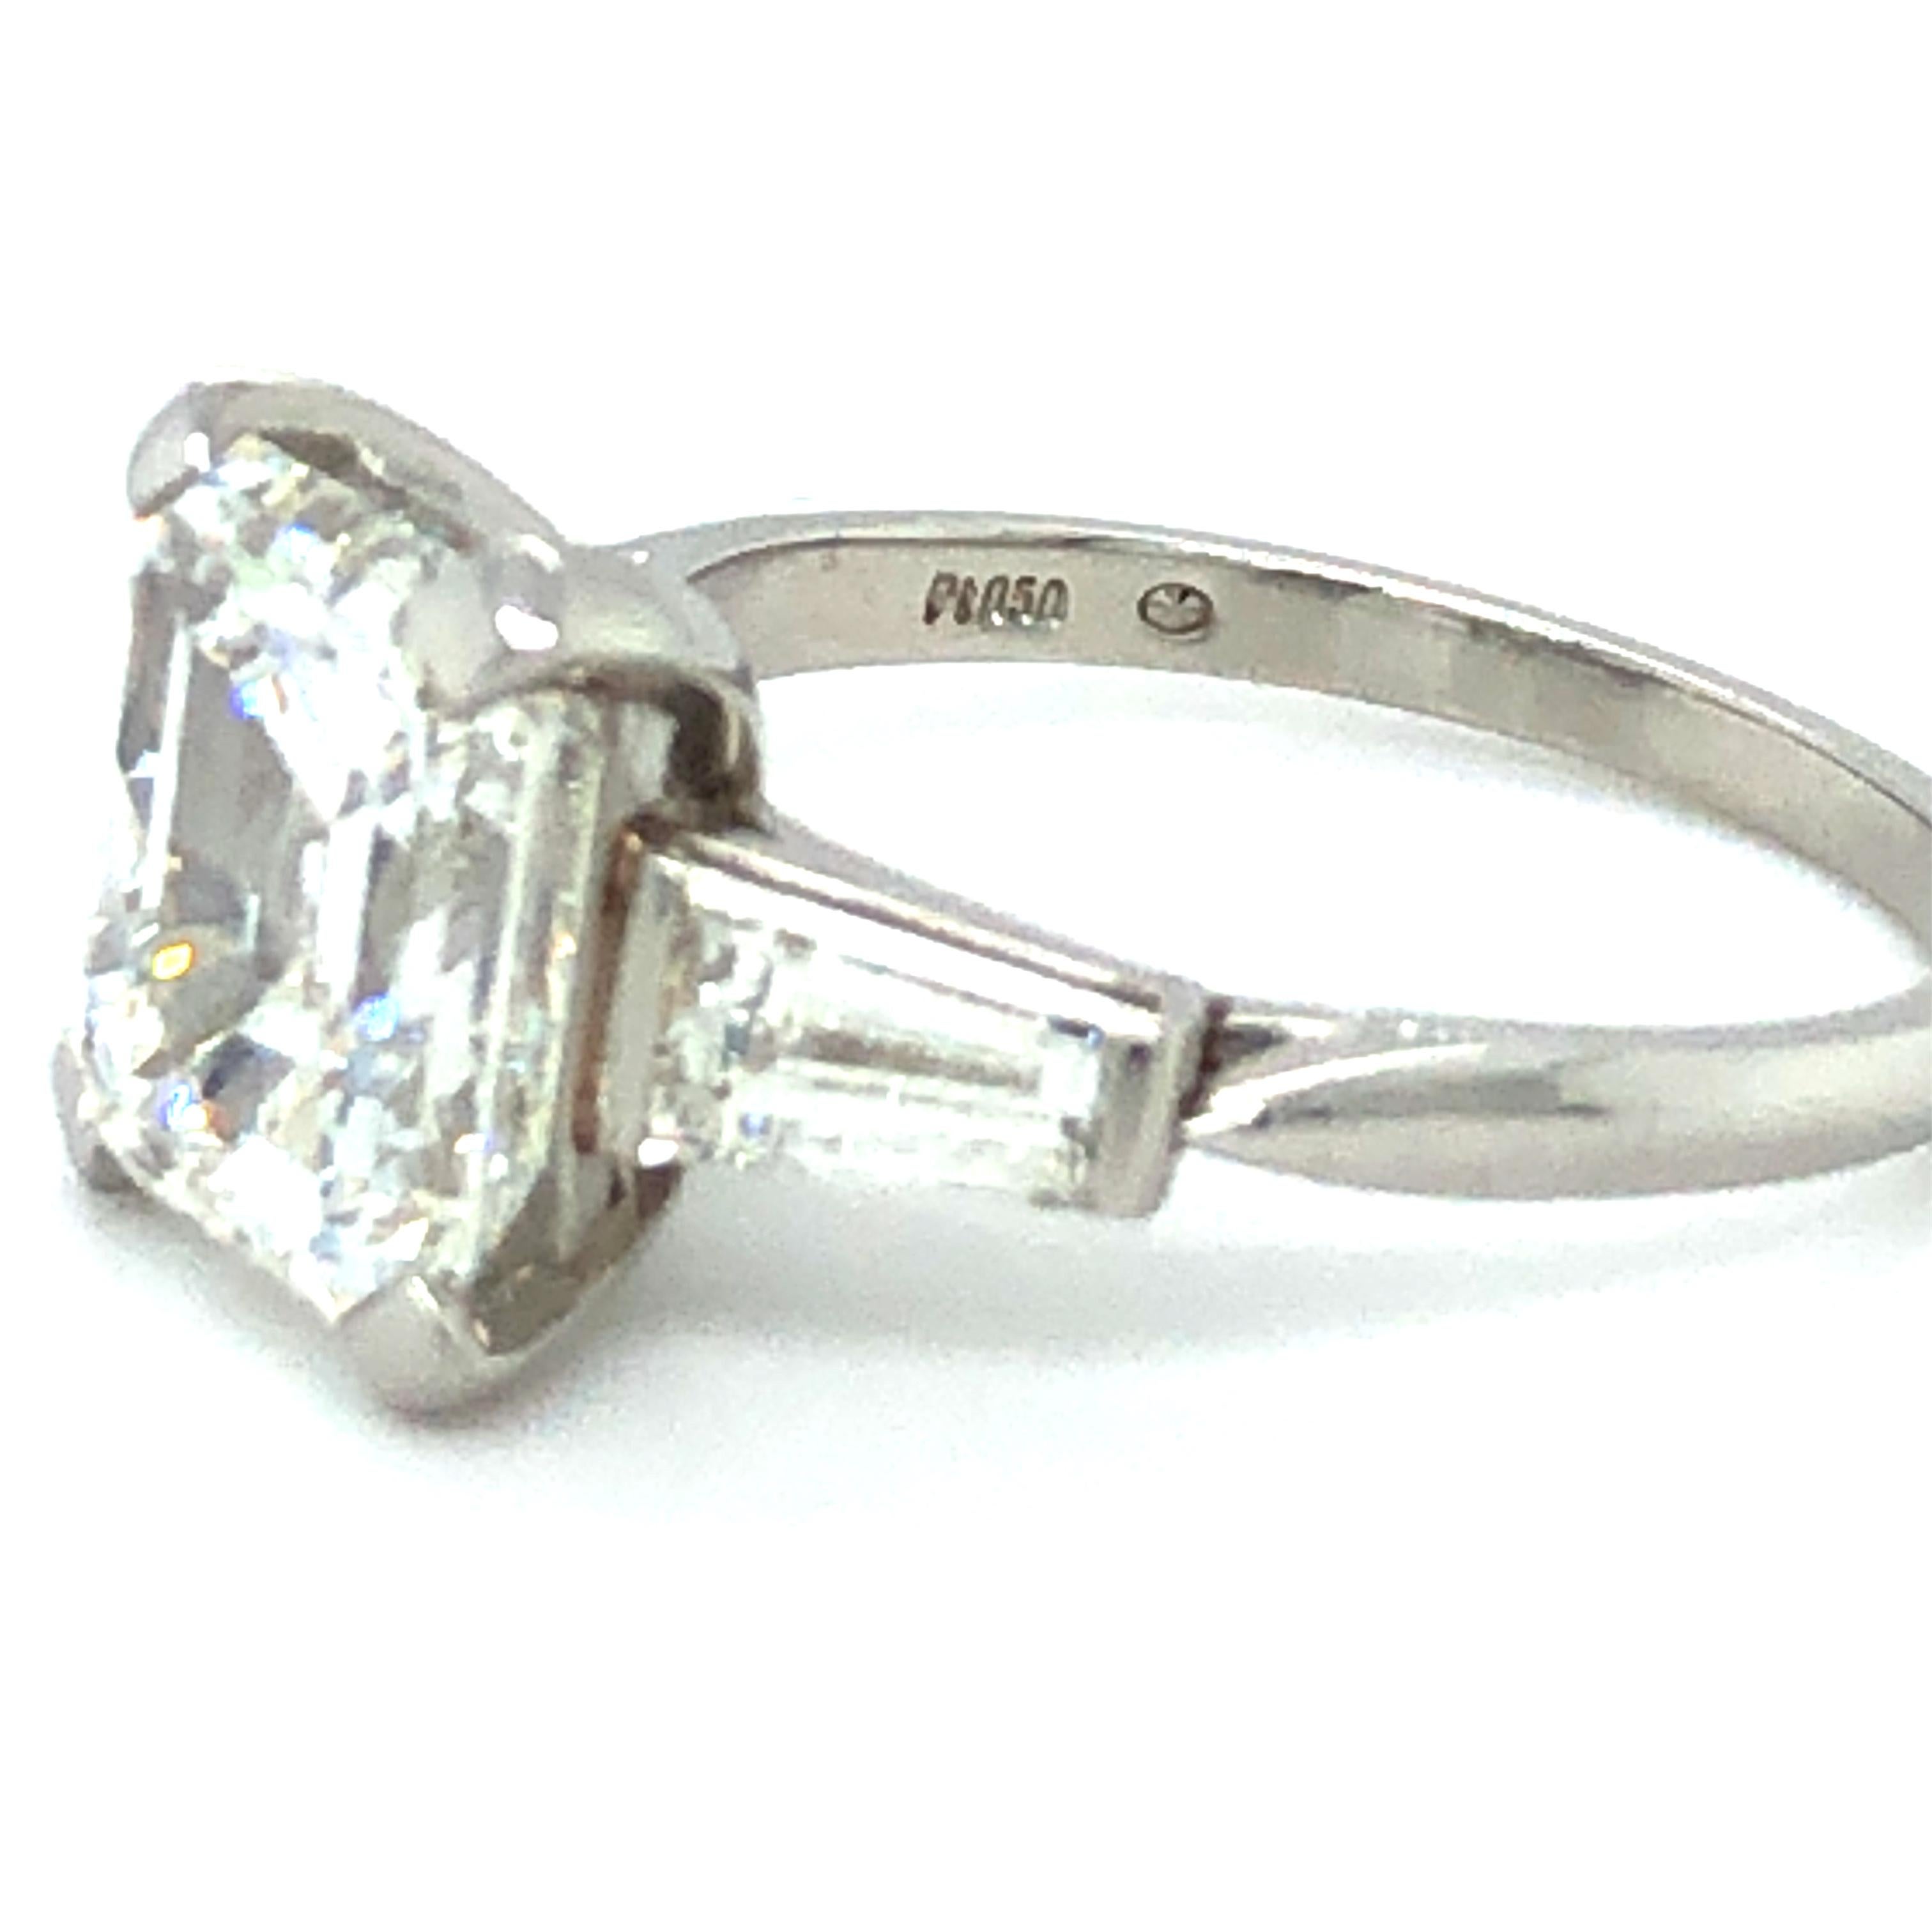 Women's or Men's GIA Certified 4.19 Carat Emerald Cut Diamond Ring in Platinum 950